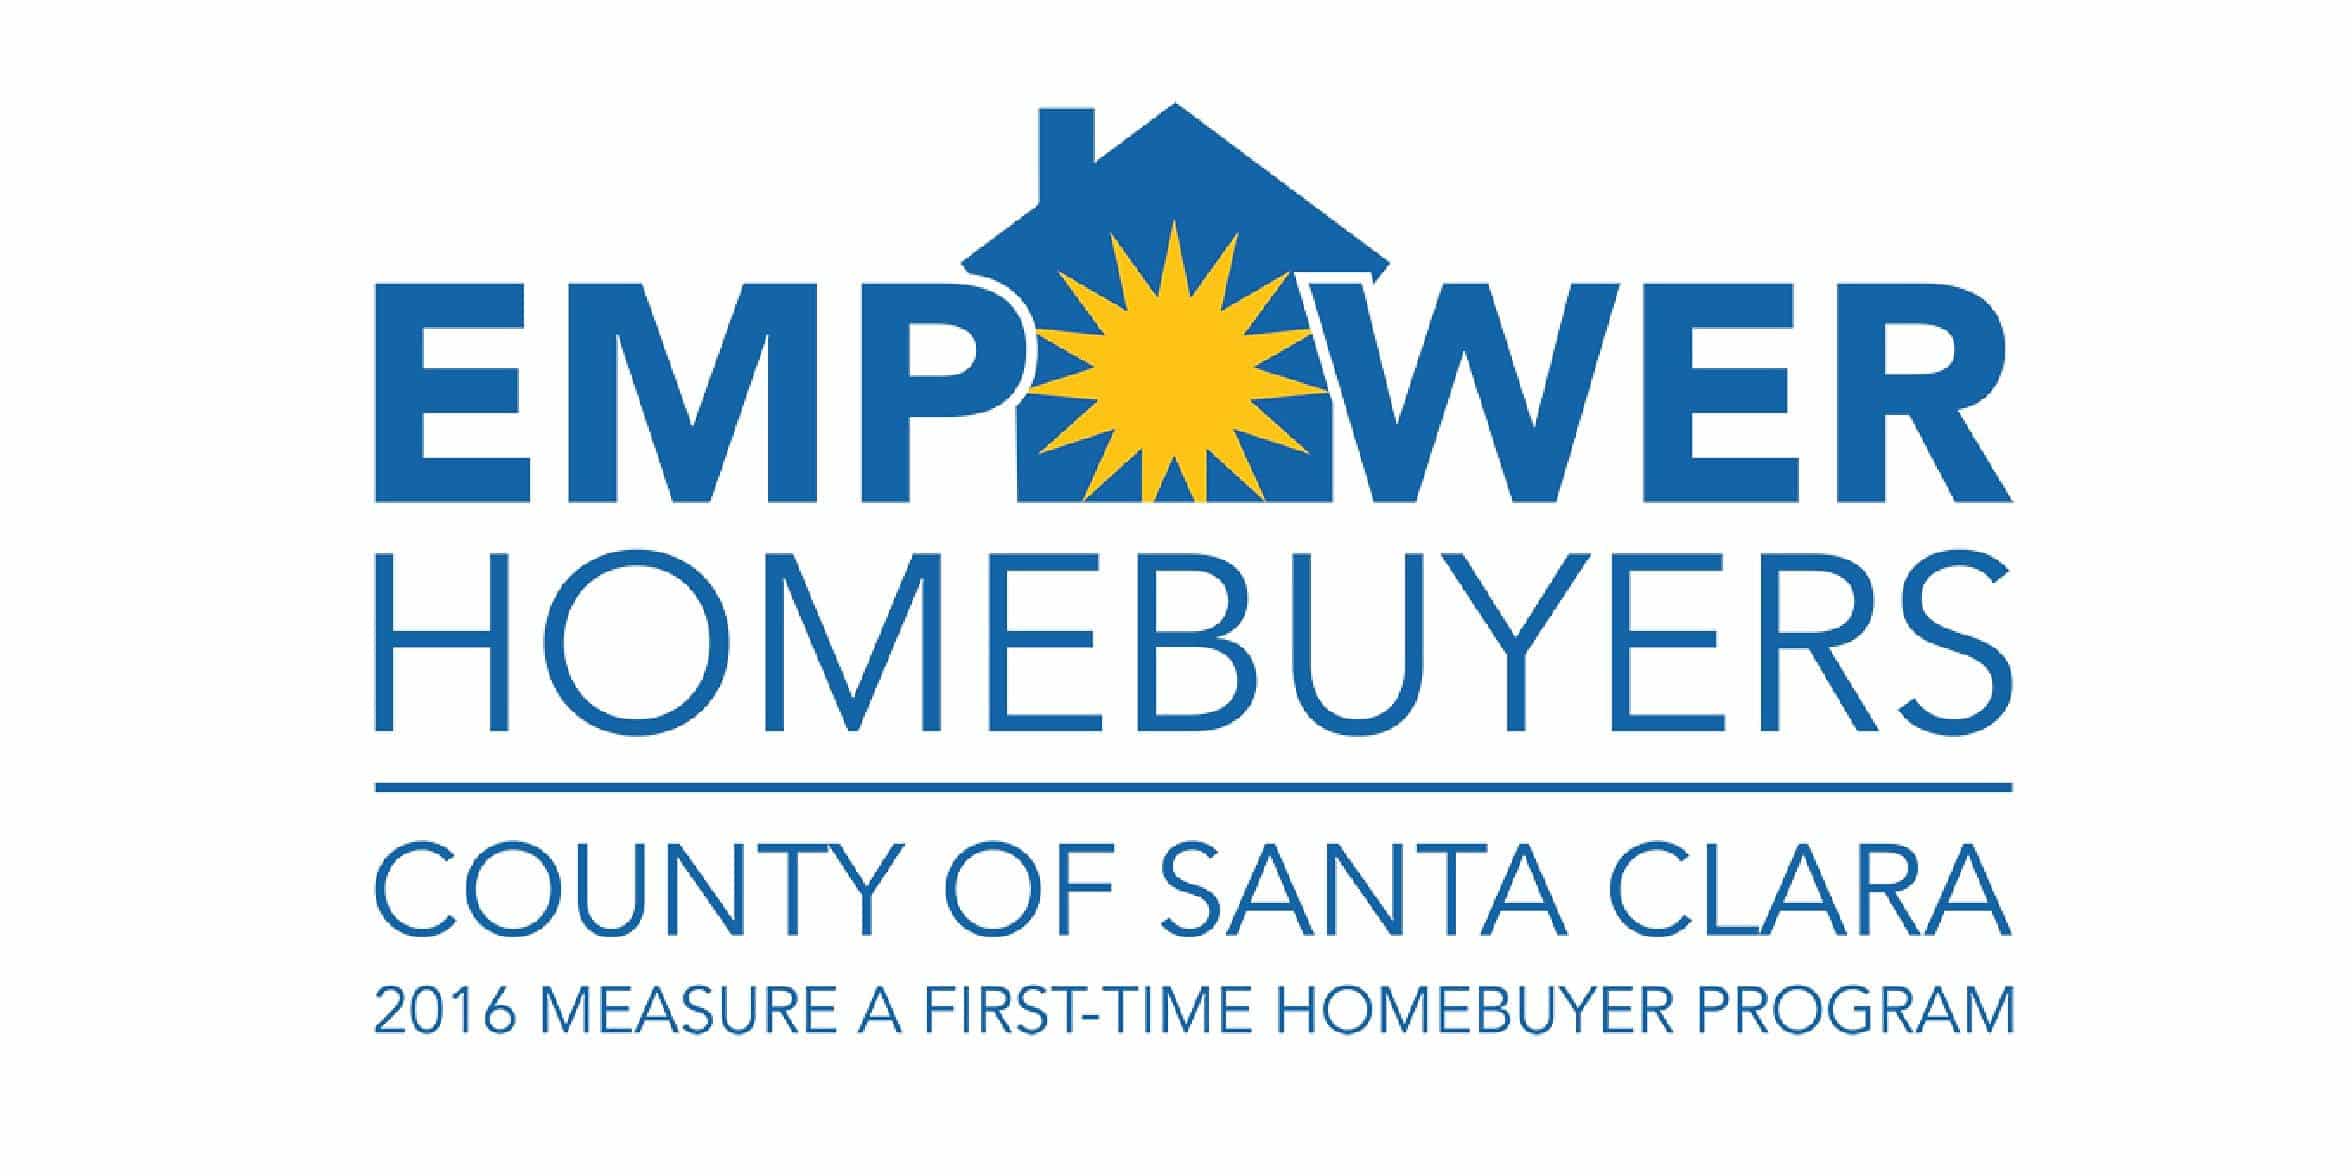 Empower Homebuyers